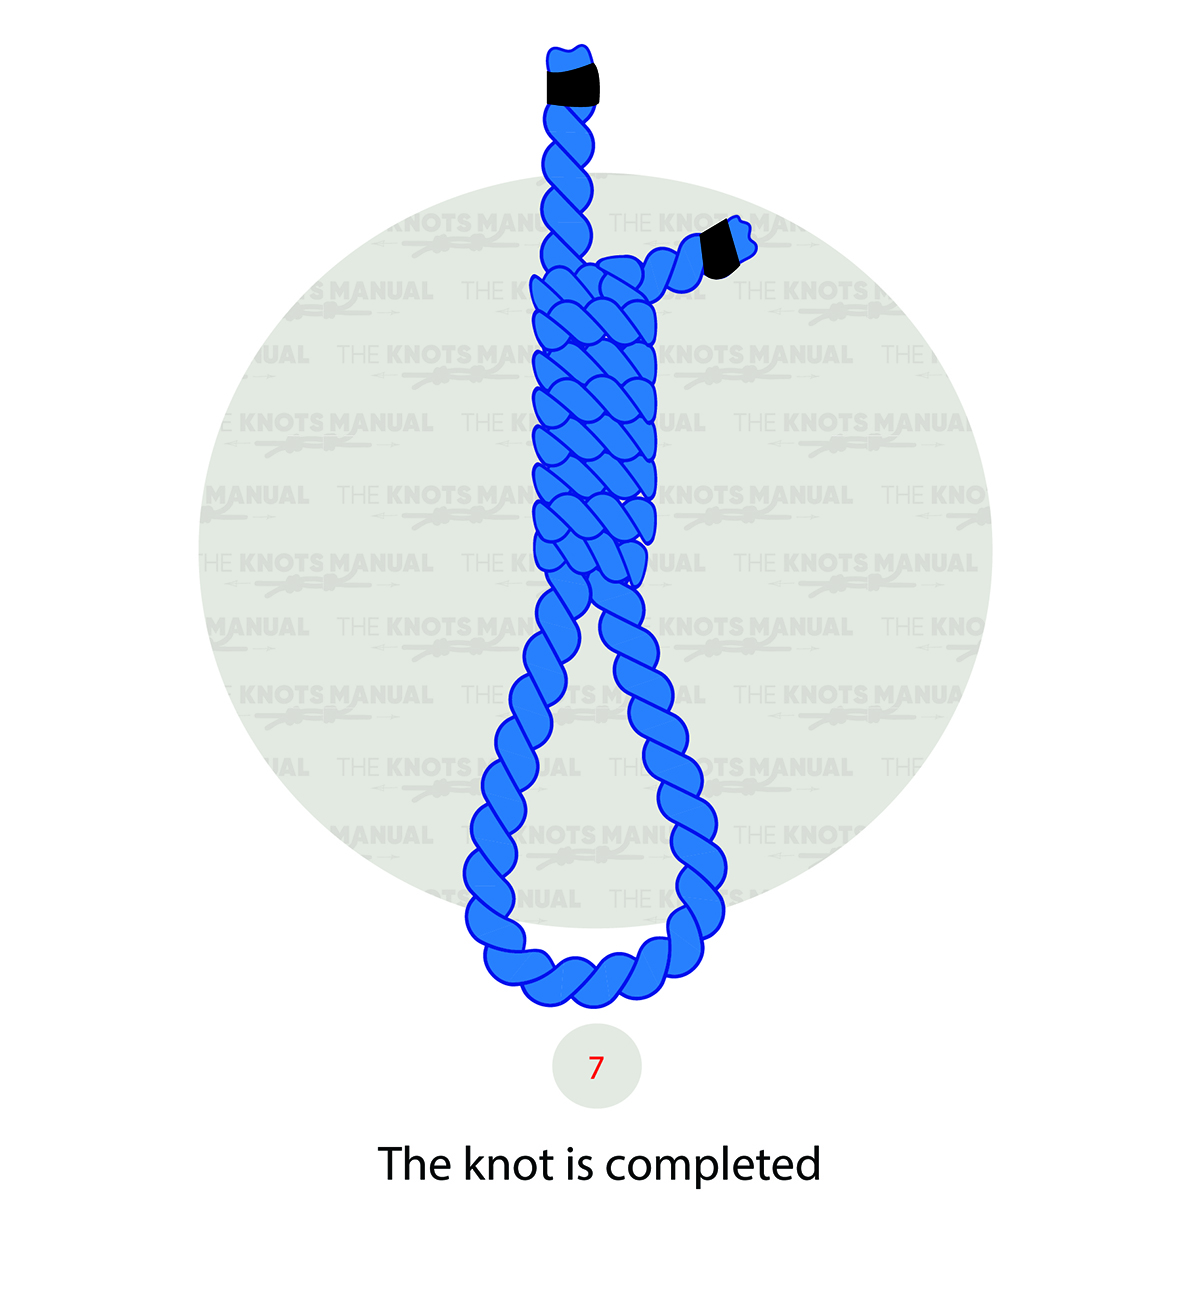 Hangman’s Knot (Noose) Step 7